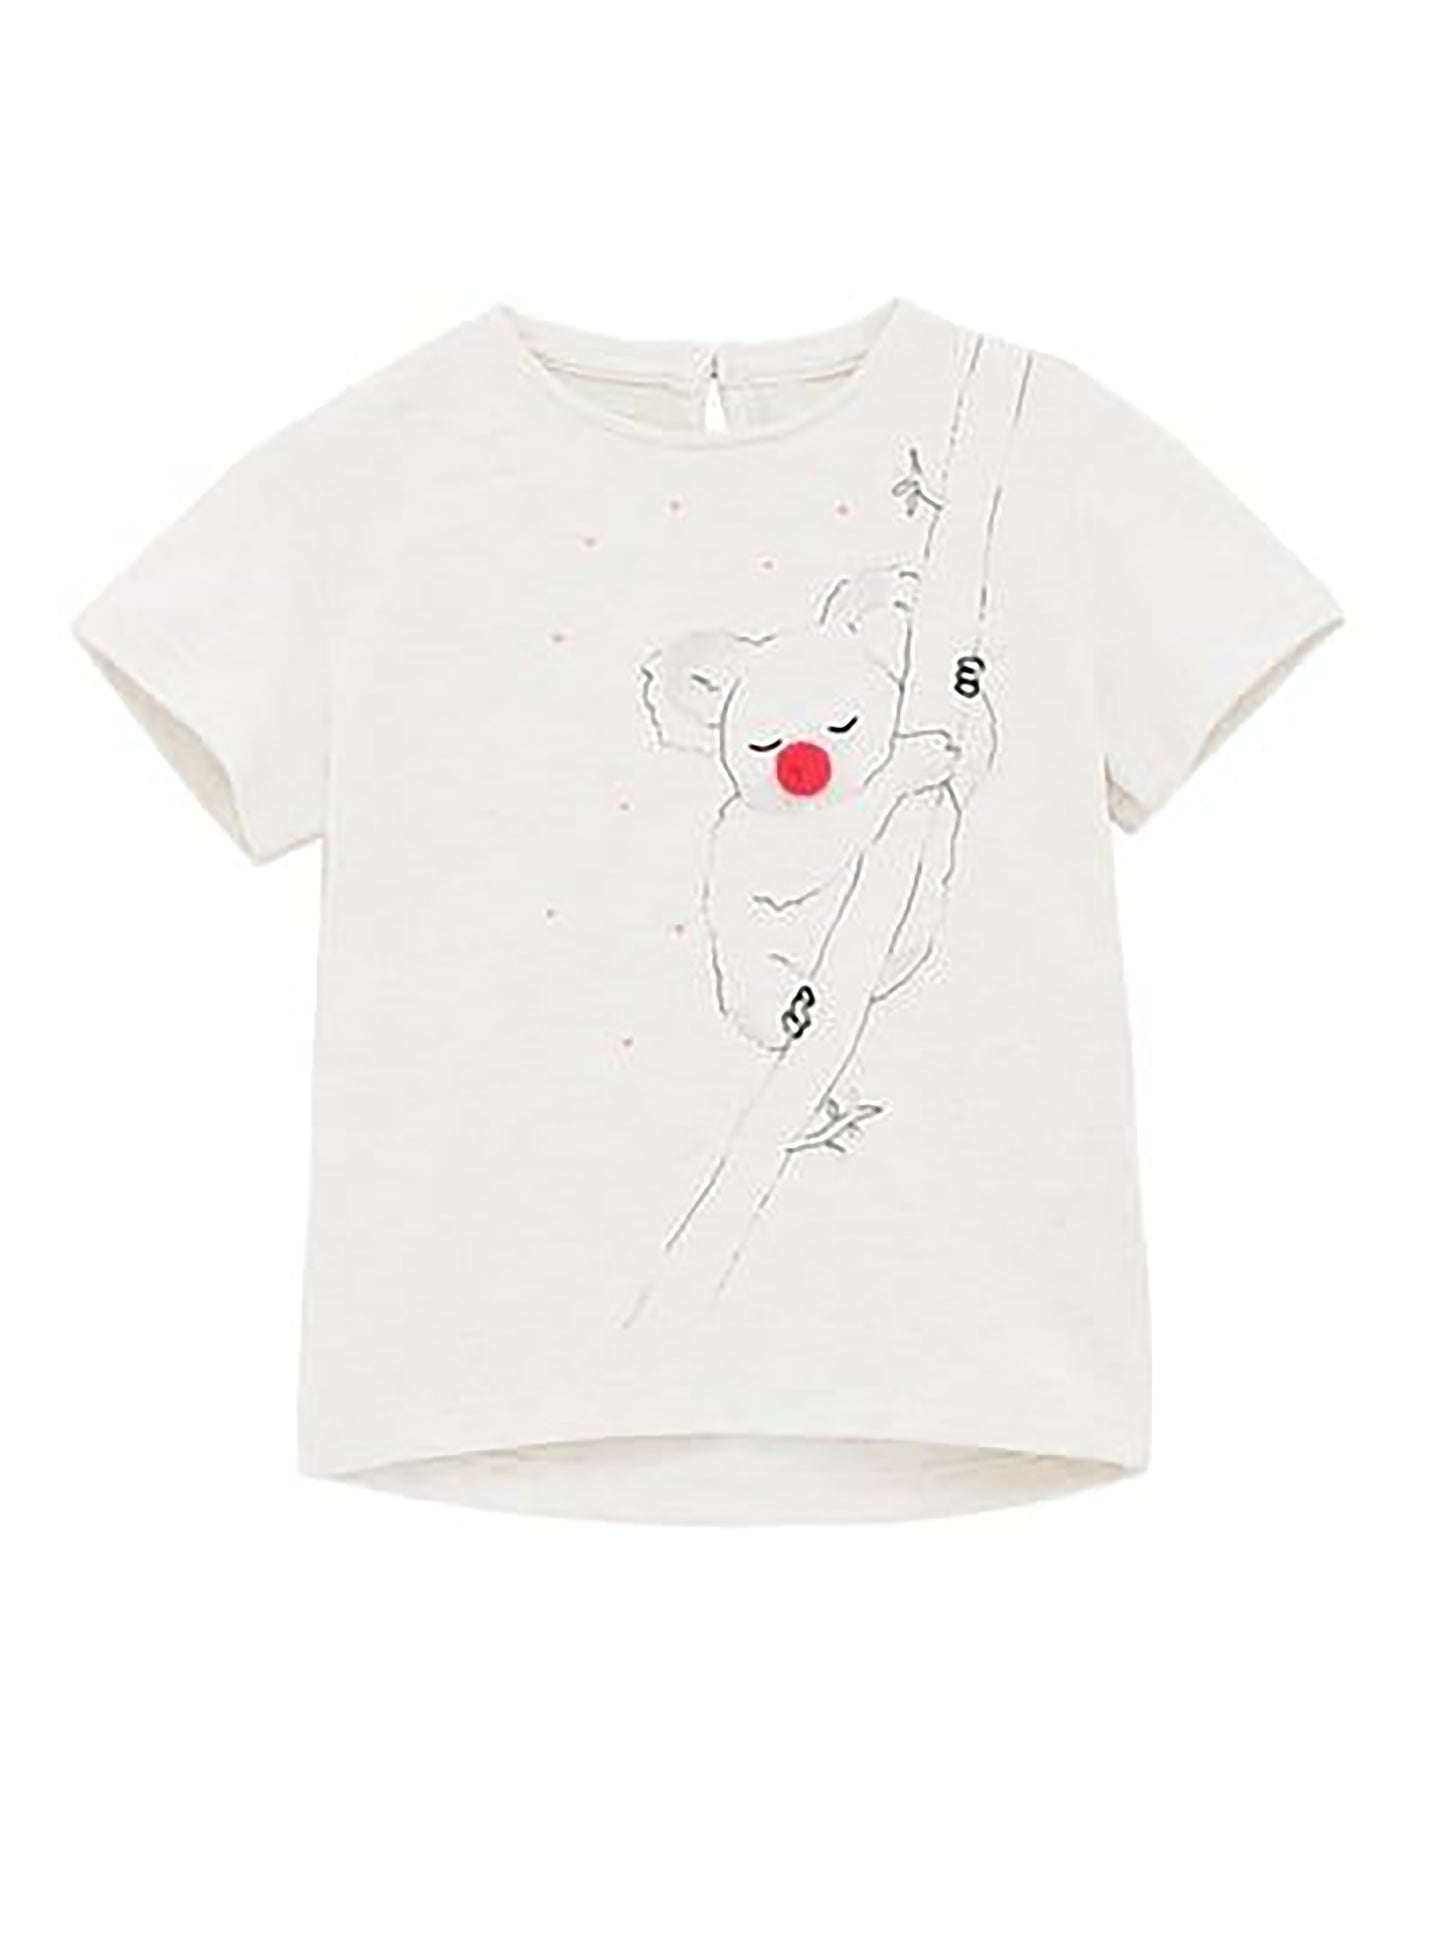 [6-9m] Zara Baby Koala t-shirt - Sand / marl